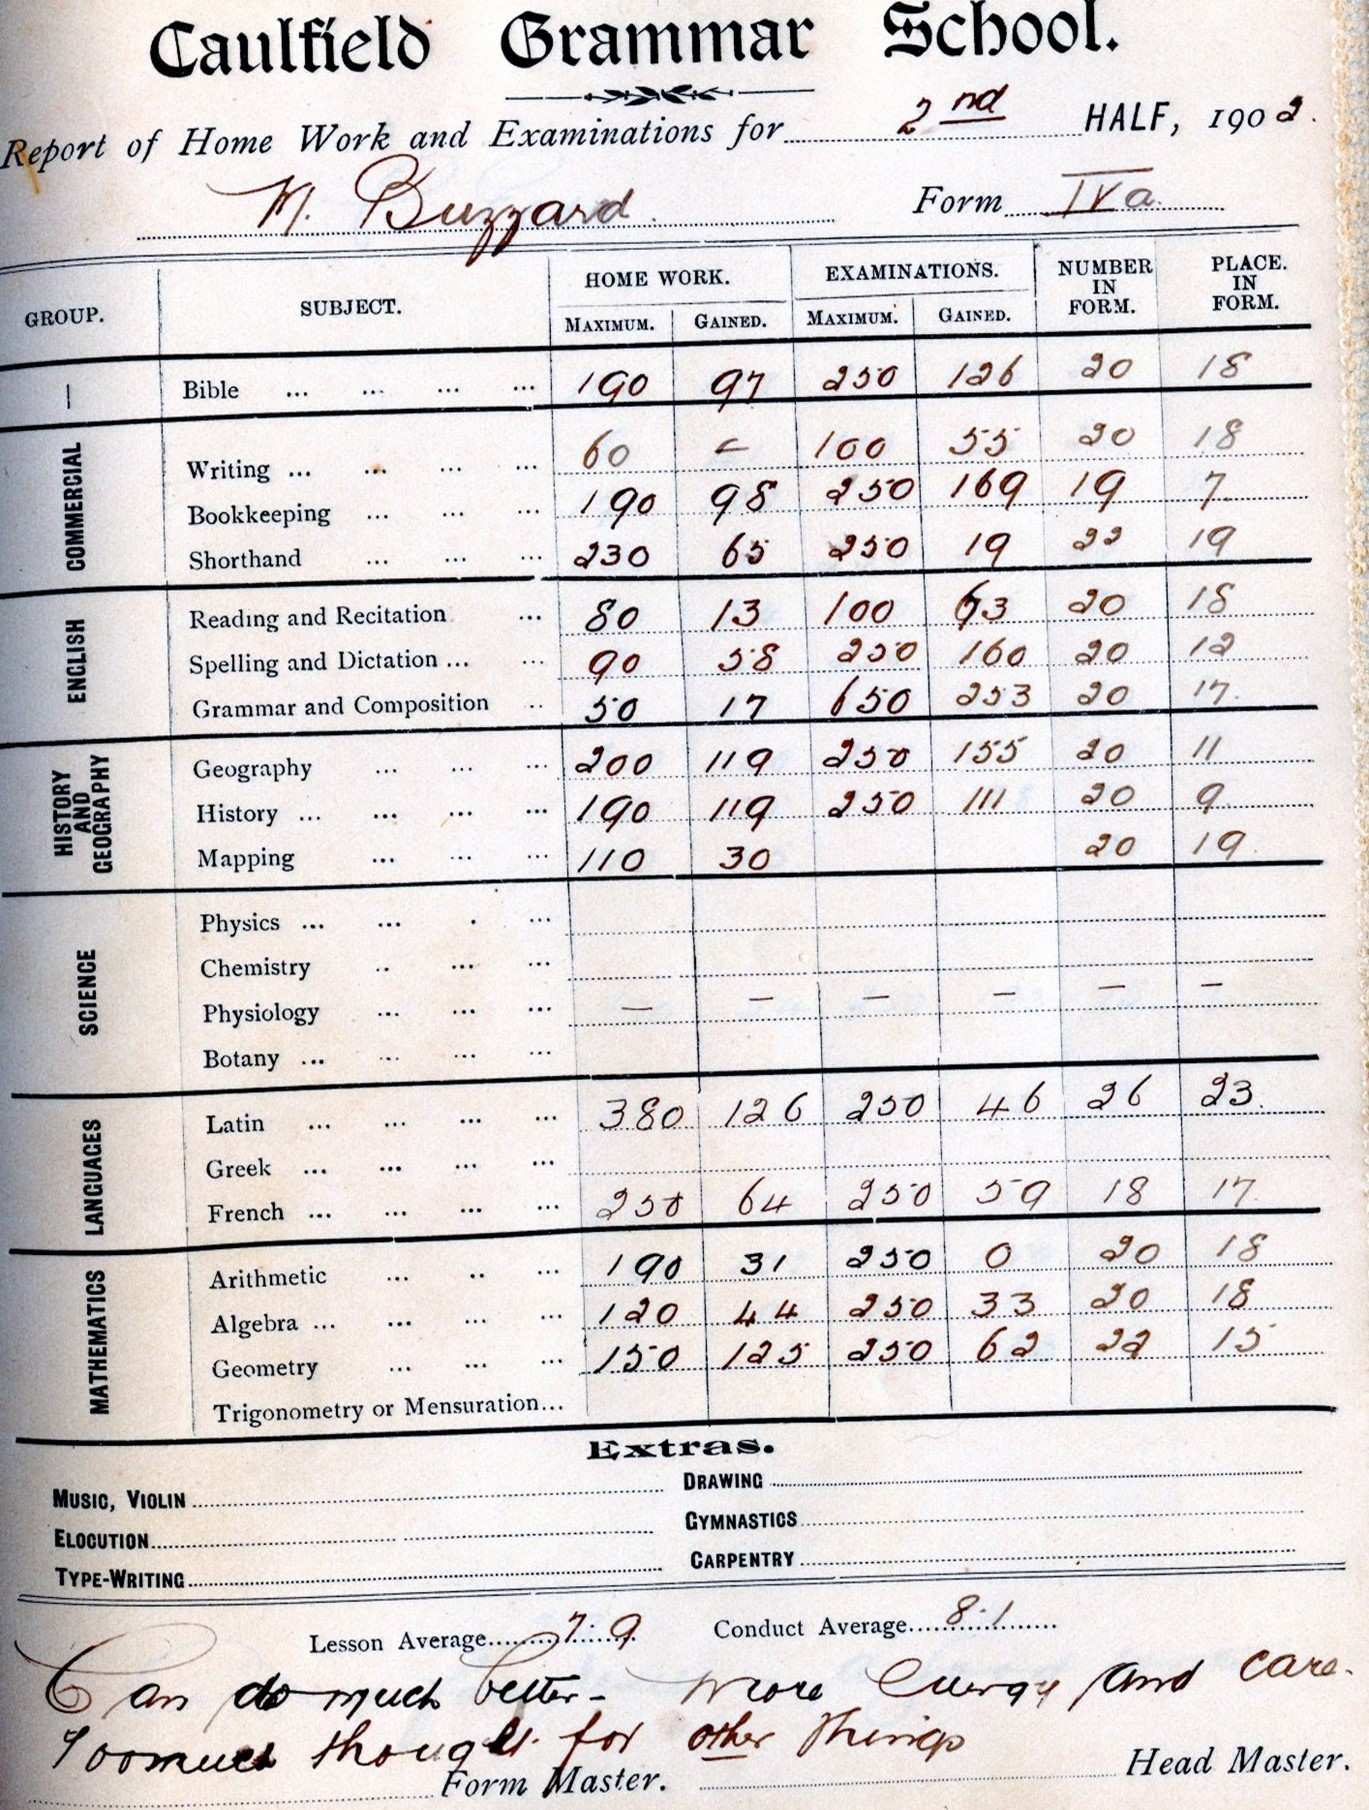 1902 2nd Half Form IV A Academic Report